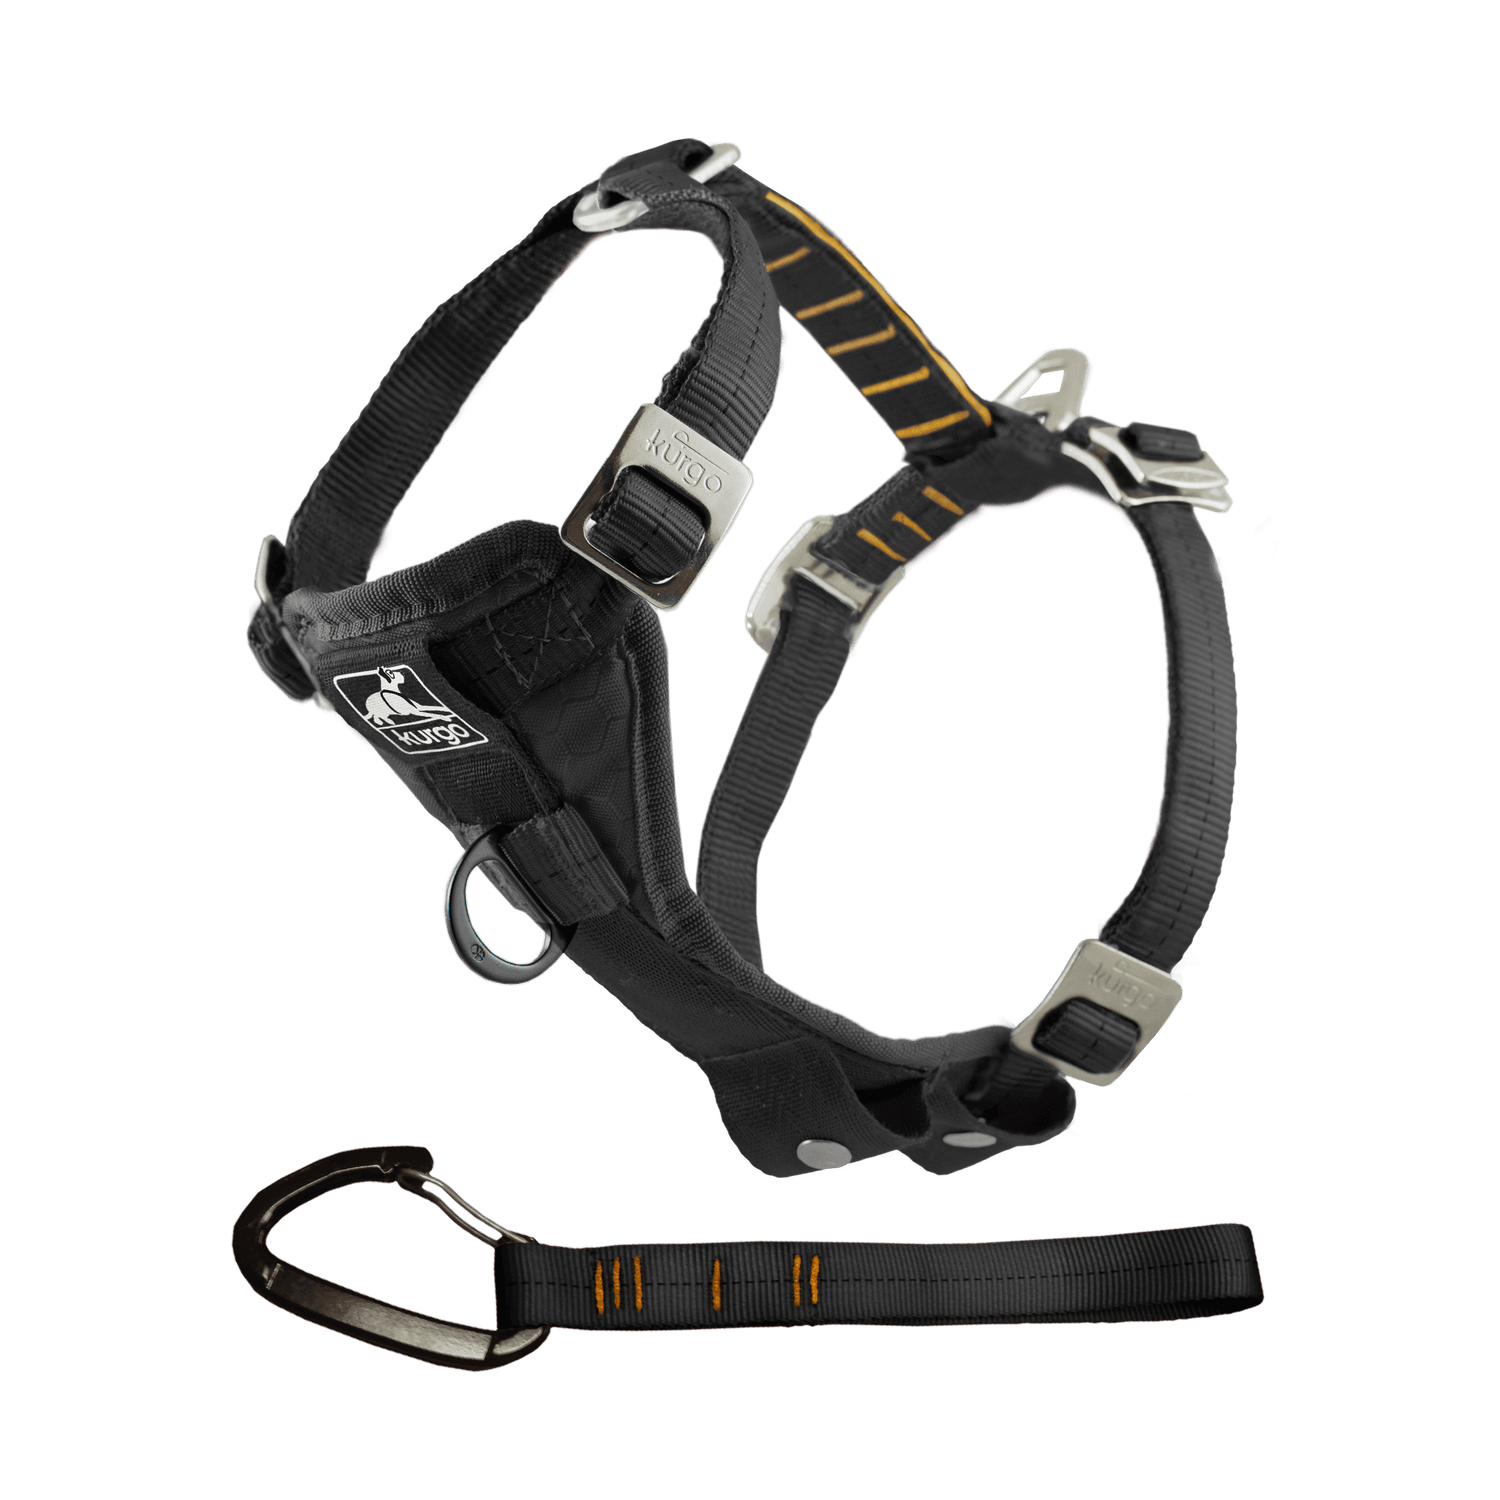 Kurgo Enhanced Strength Tru-Fit Smart Harness - Black, Small